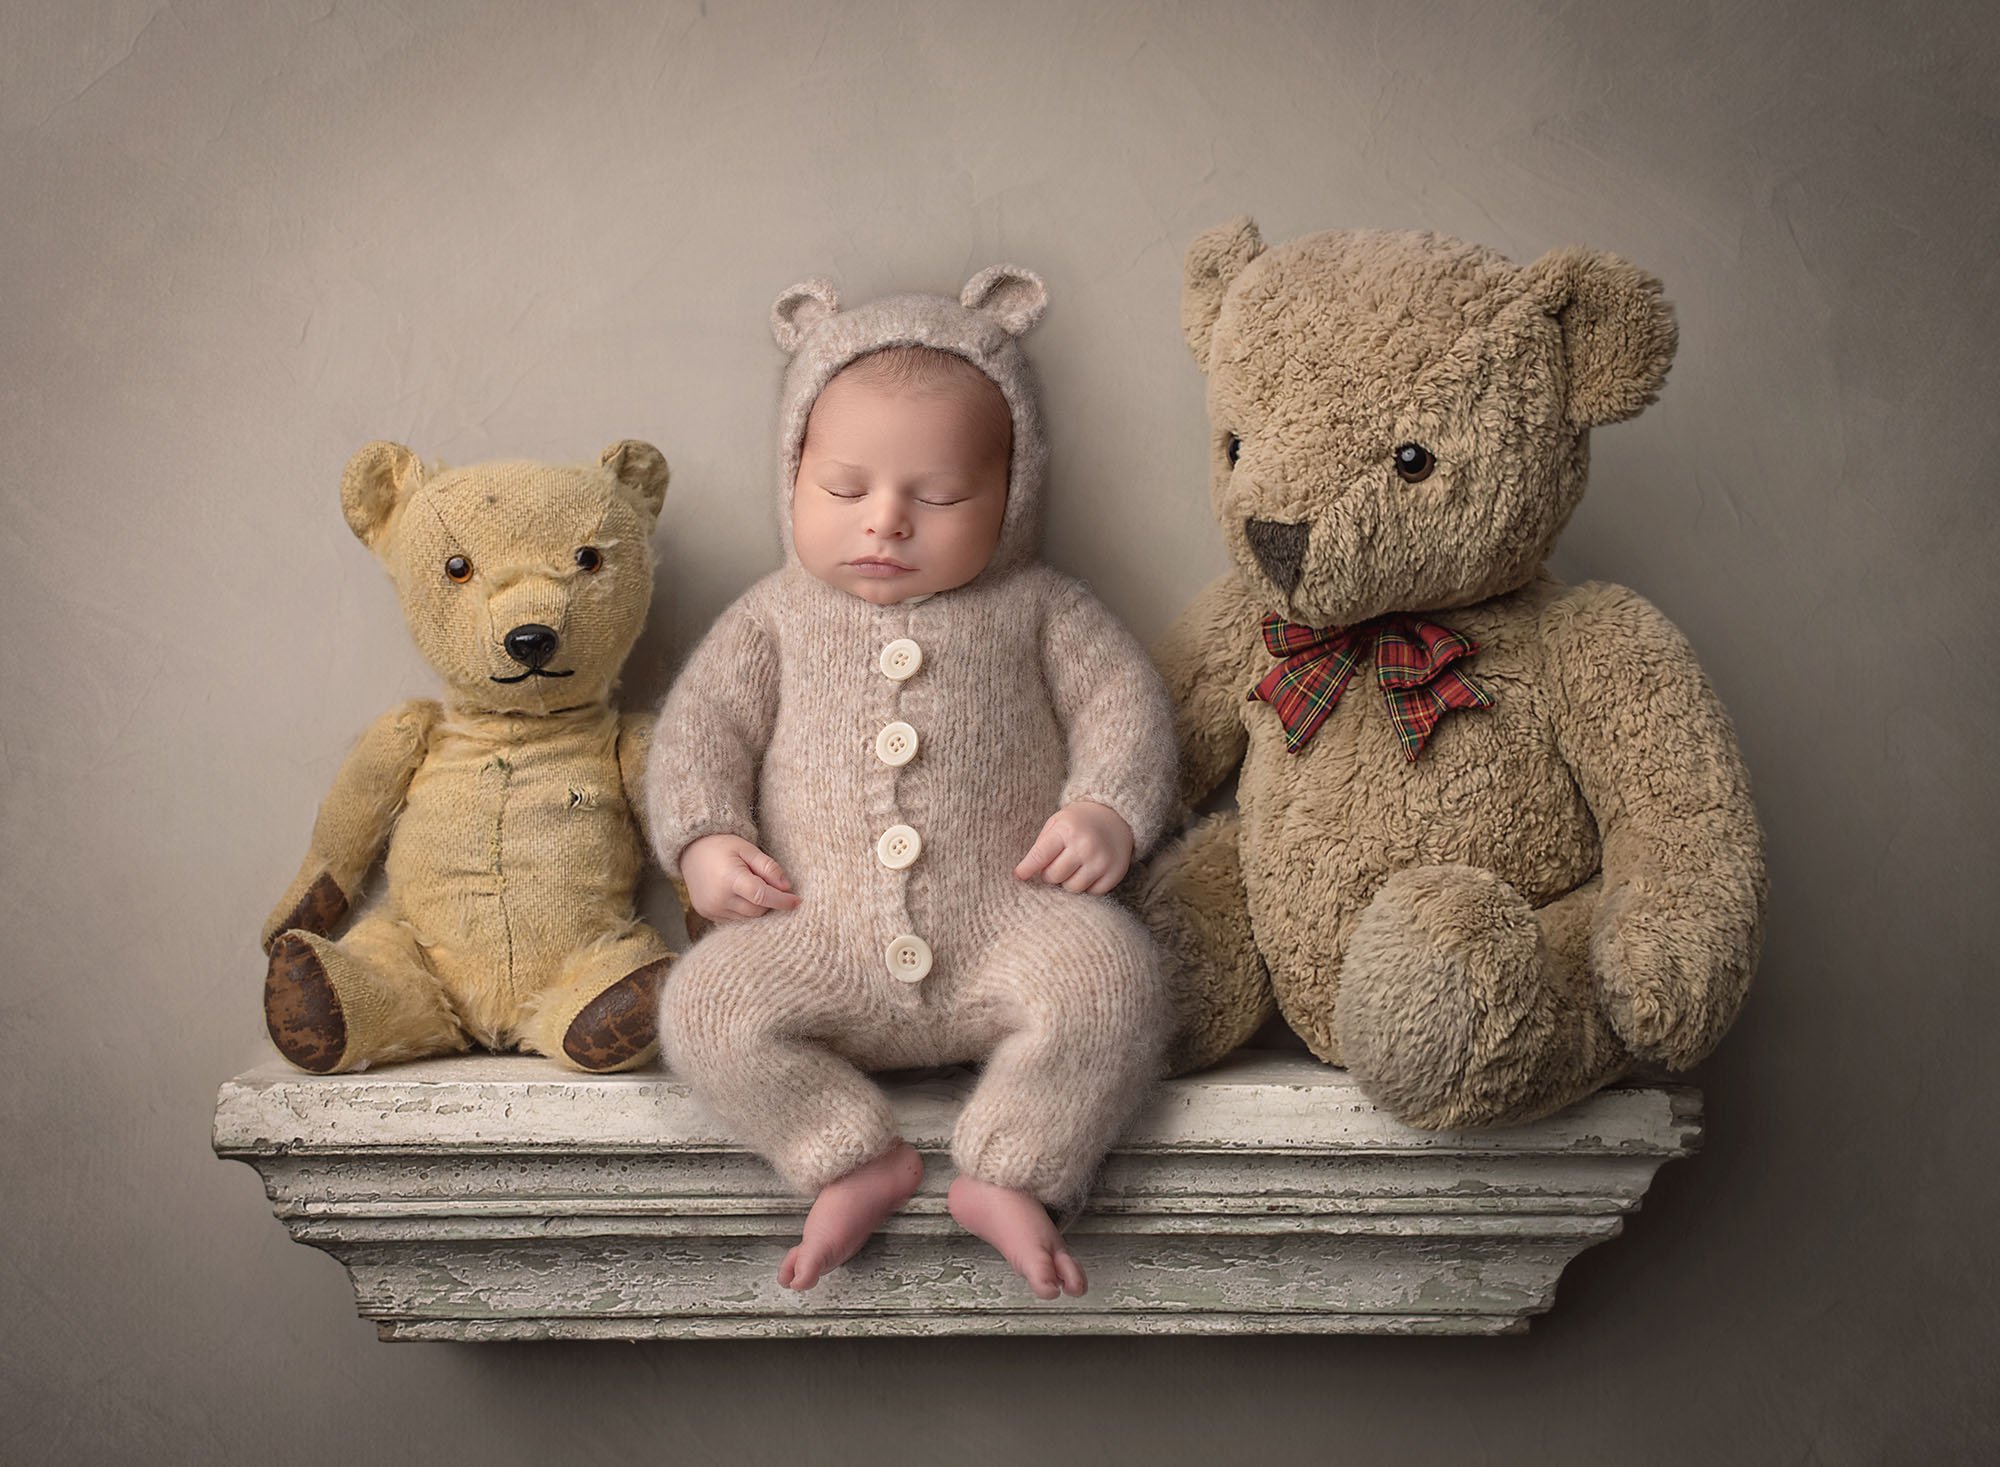 Baby Teddy Bear